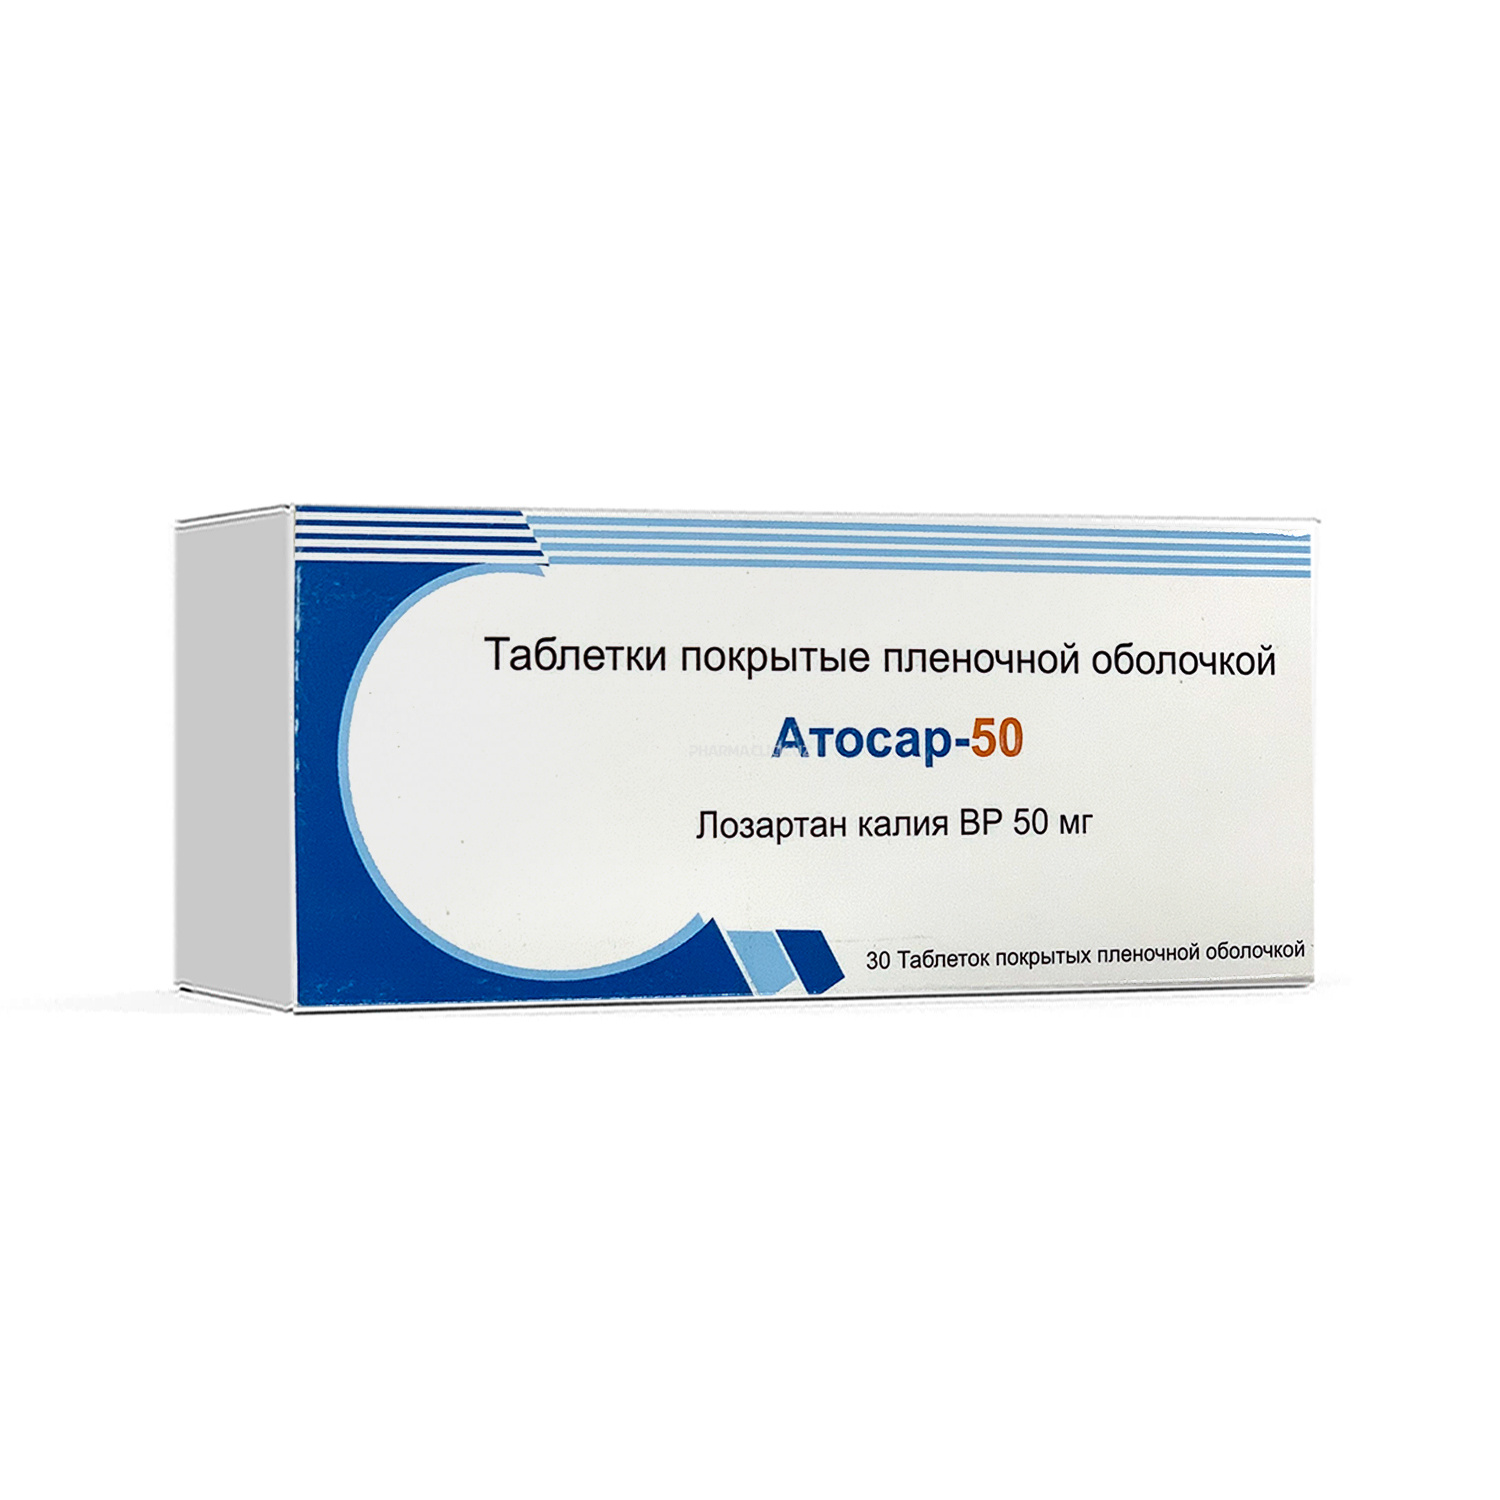 Аtosar tab. 50 mg №30